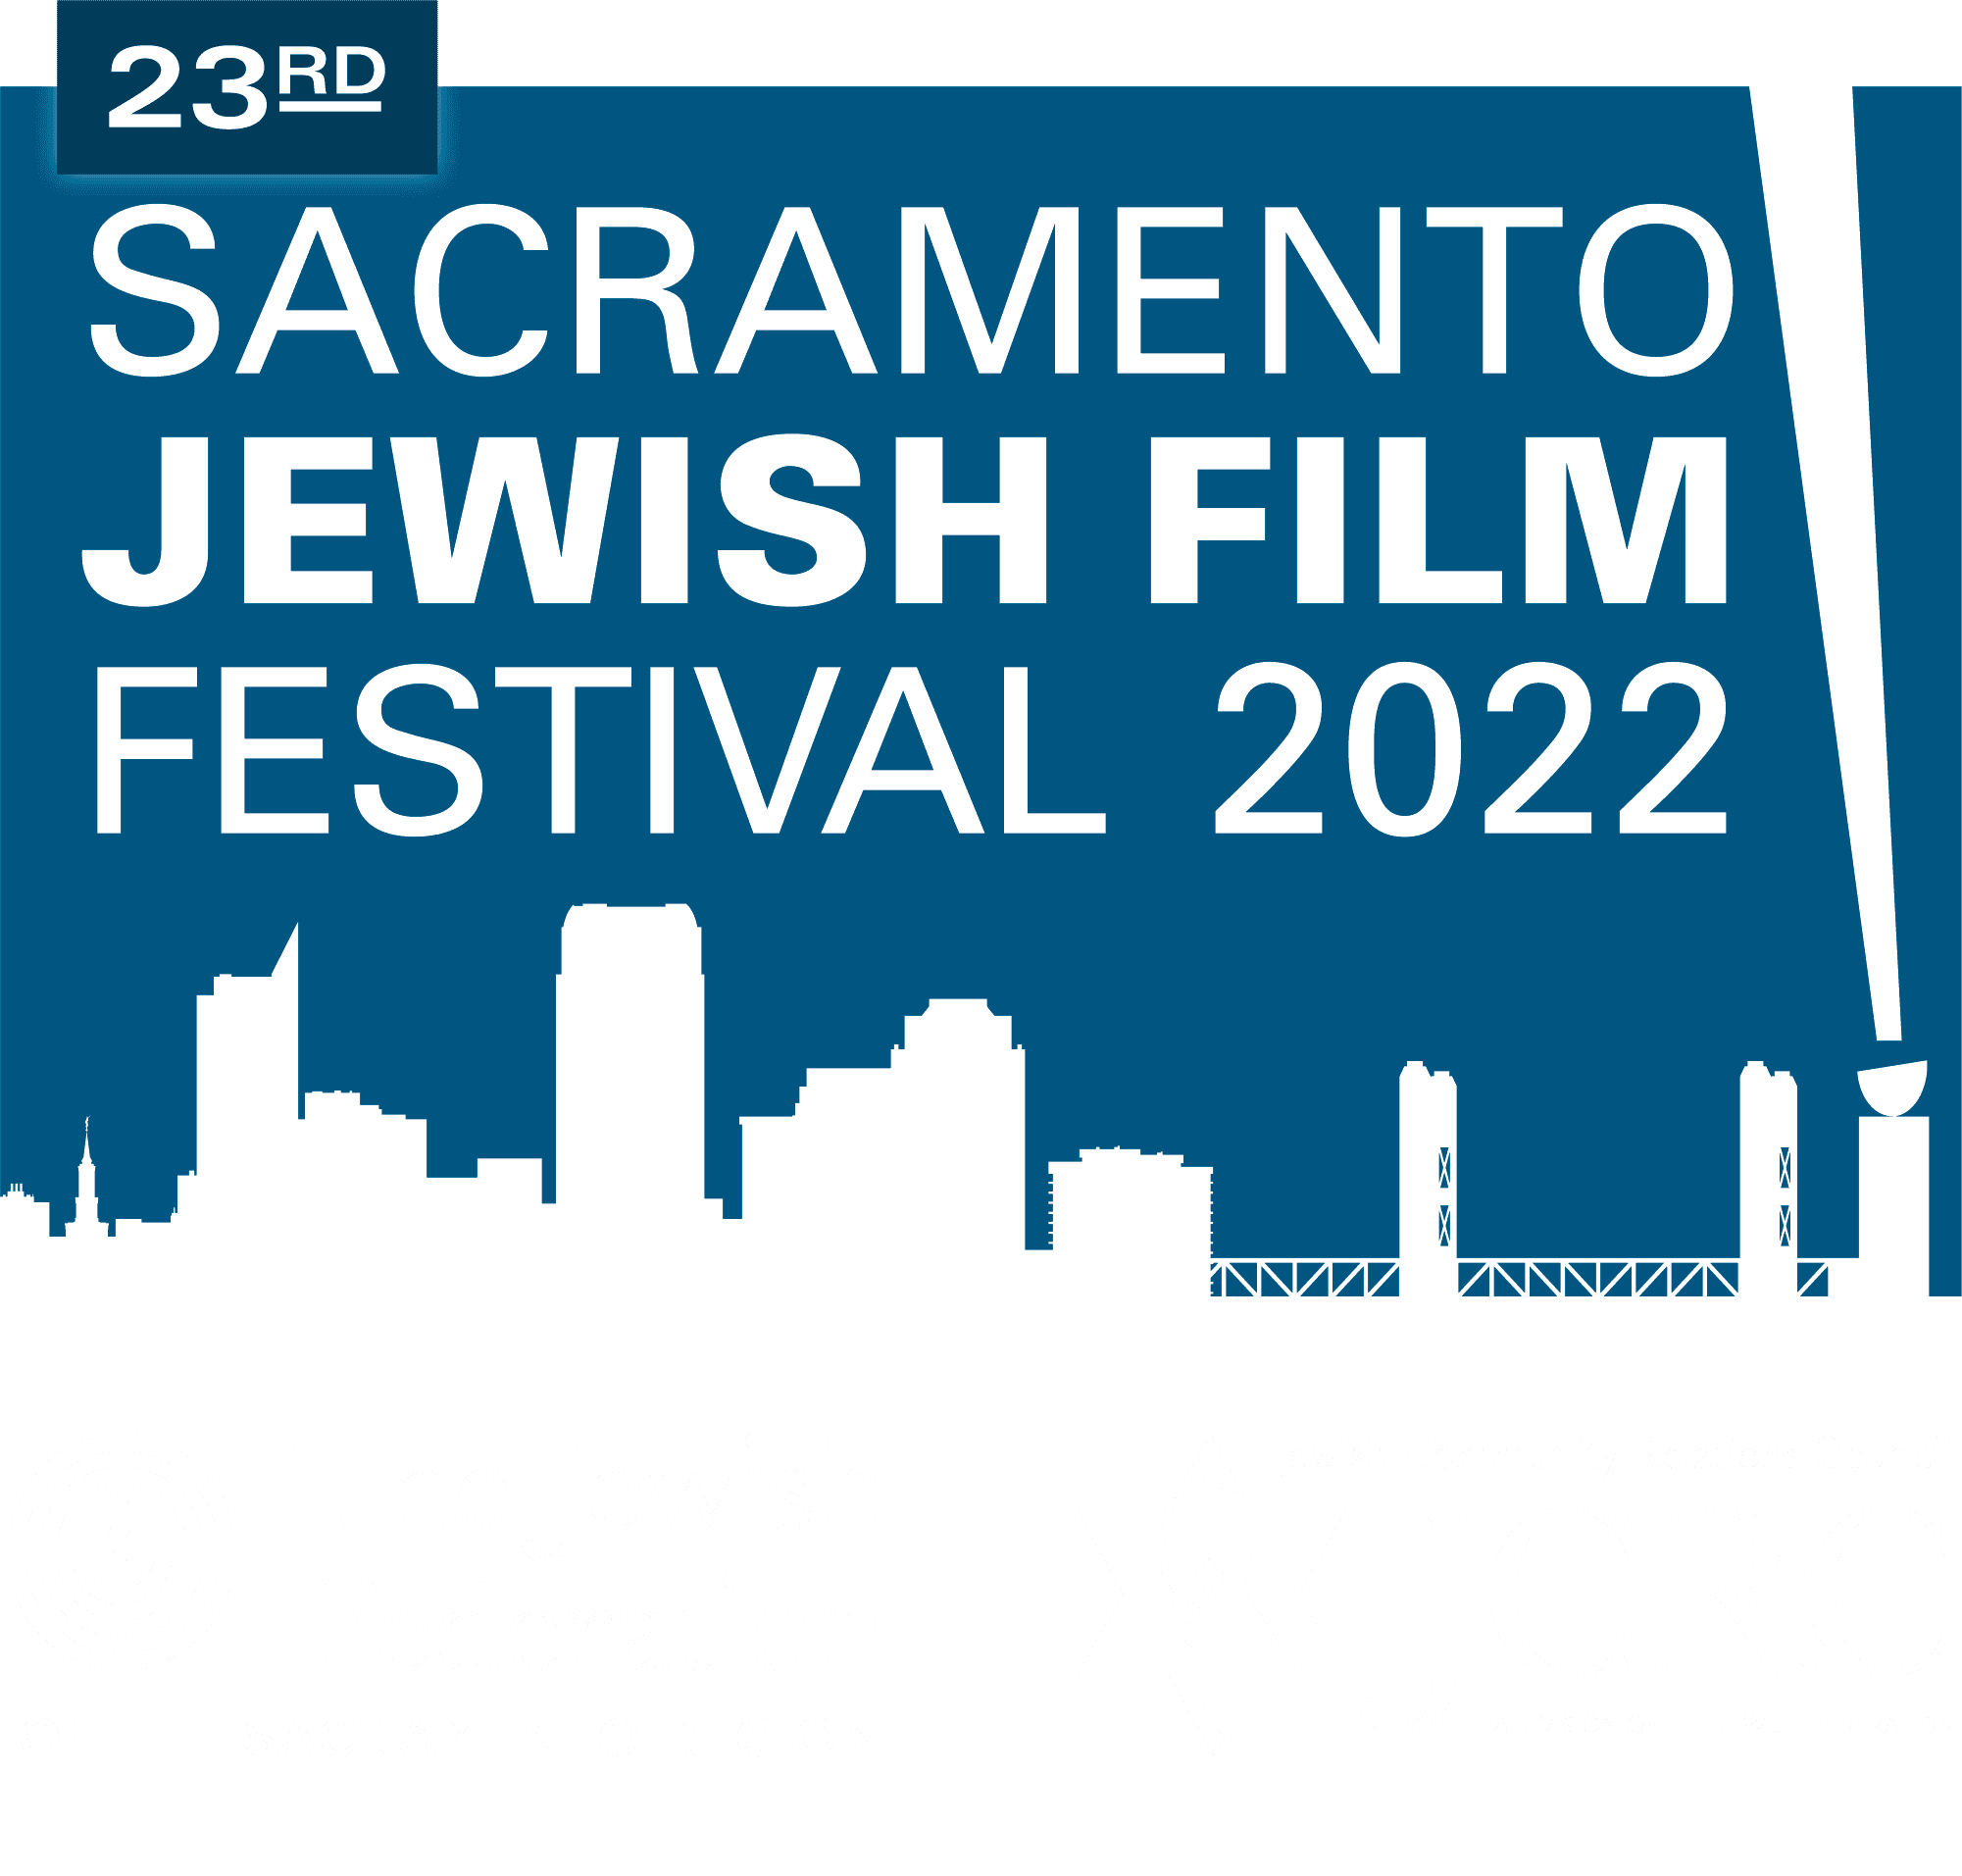 23rd Sacramento Jewish Film Festival, March 1 - 21, 2022